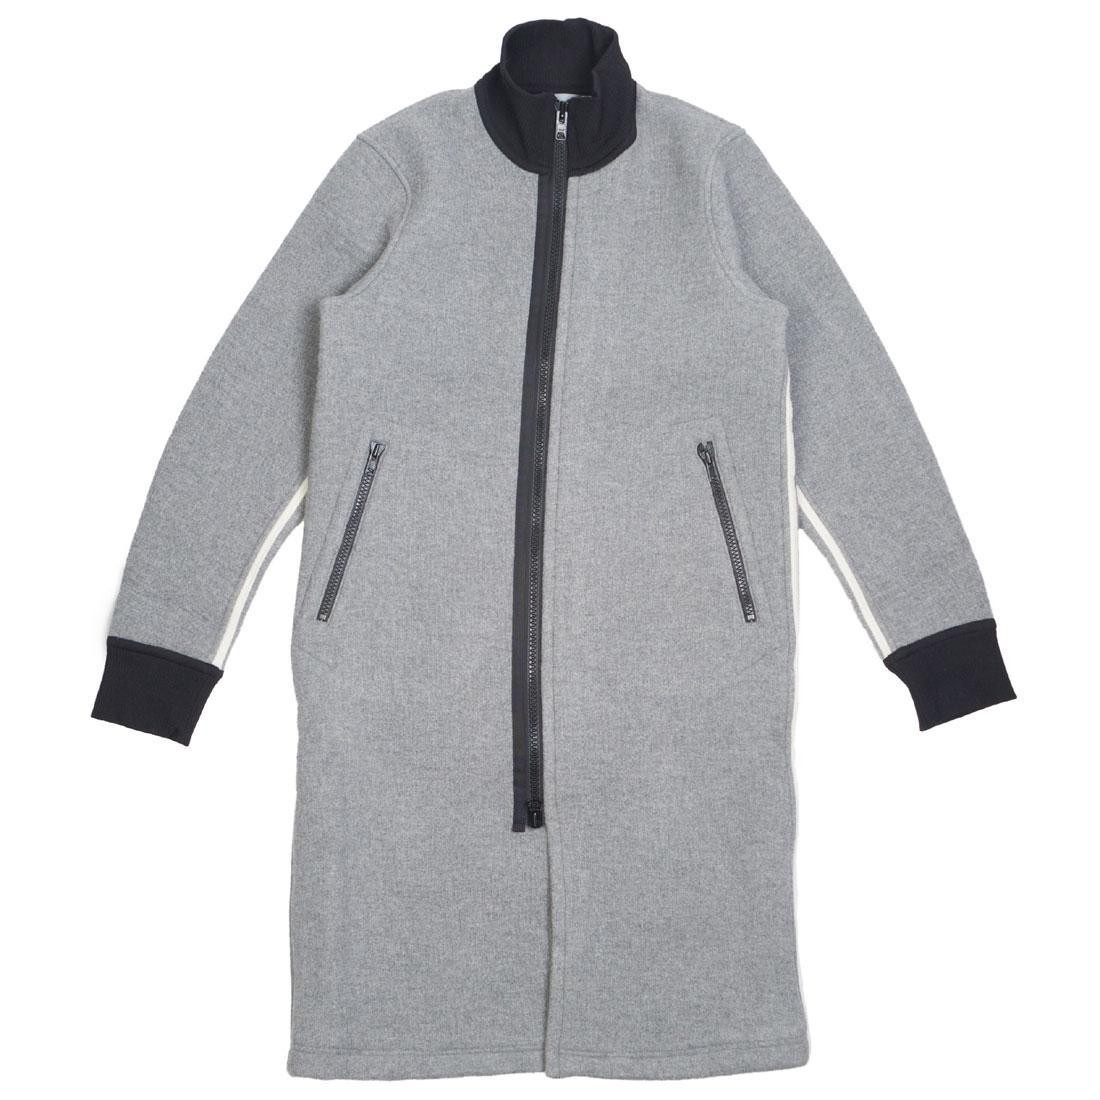 Adidas Y-3 Men Spacer Wool Coat (gray / grey heather / off white / black)